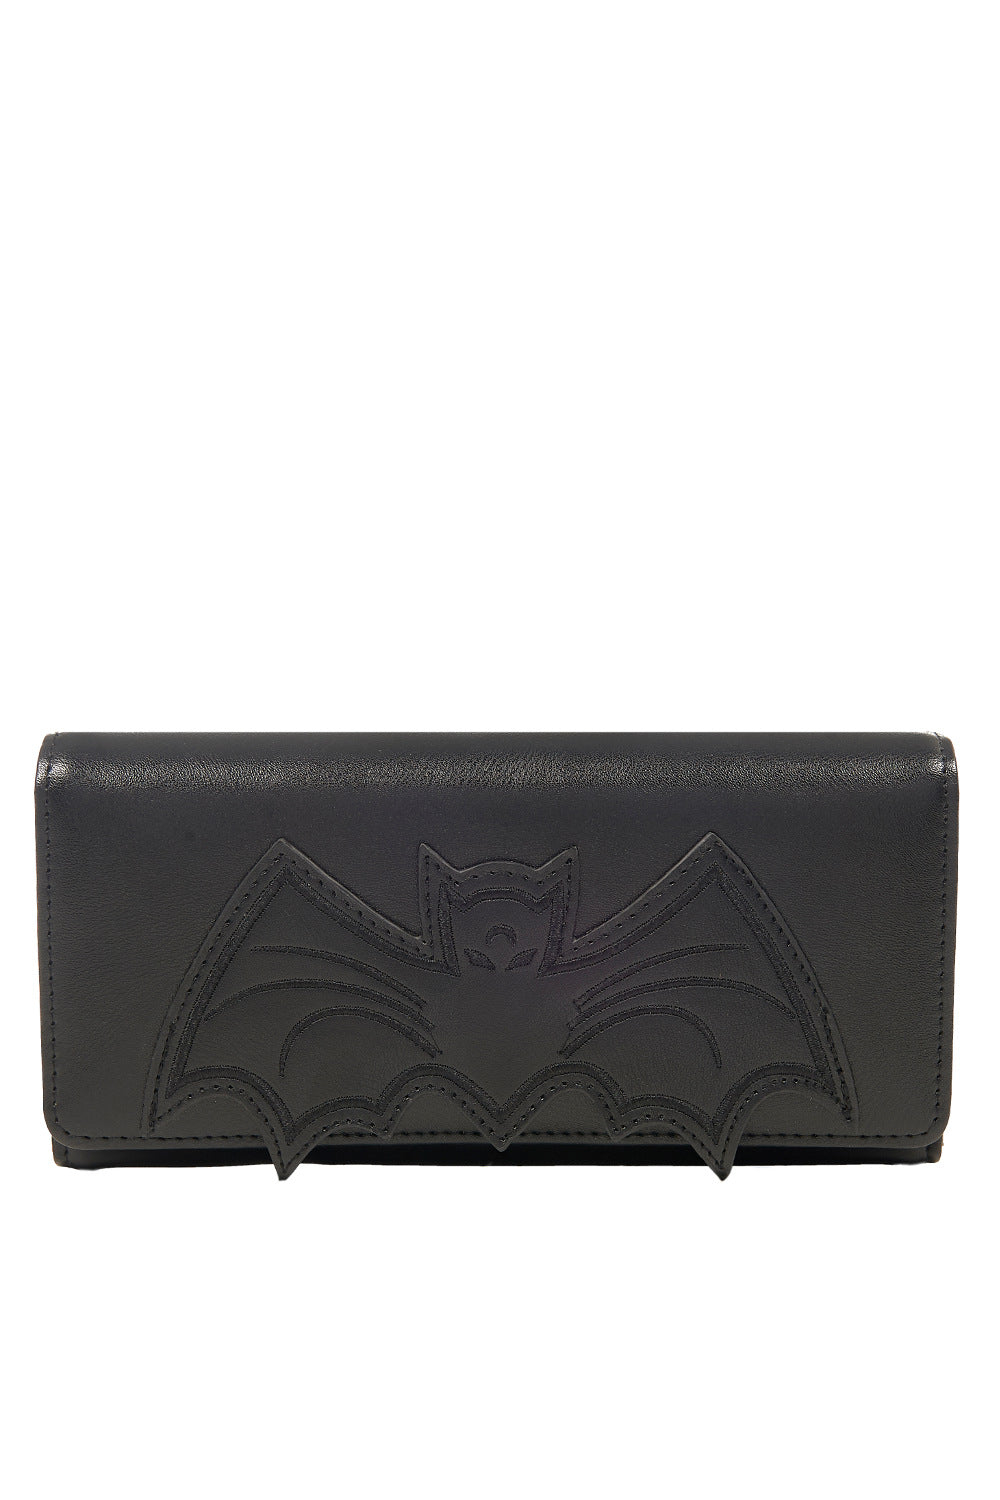 Black bat embossed purse 